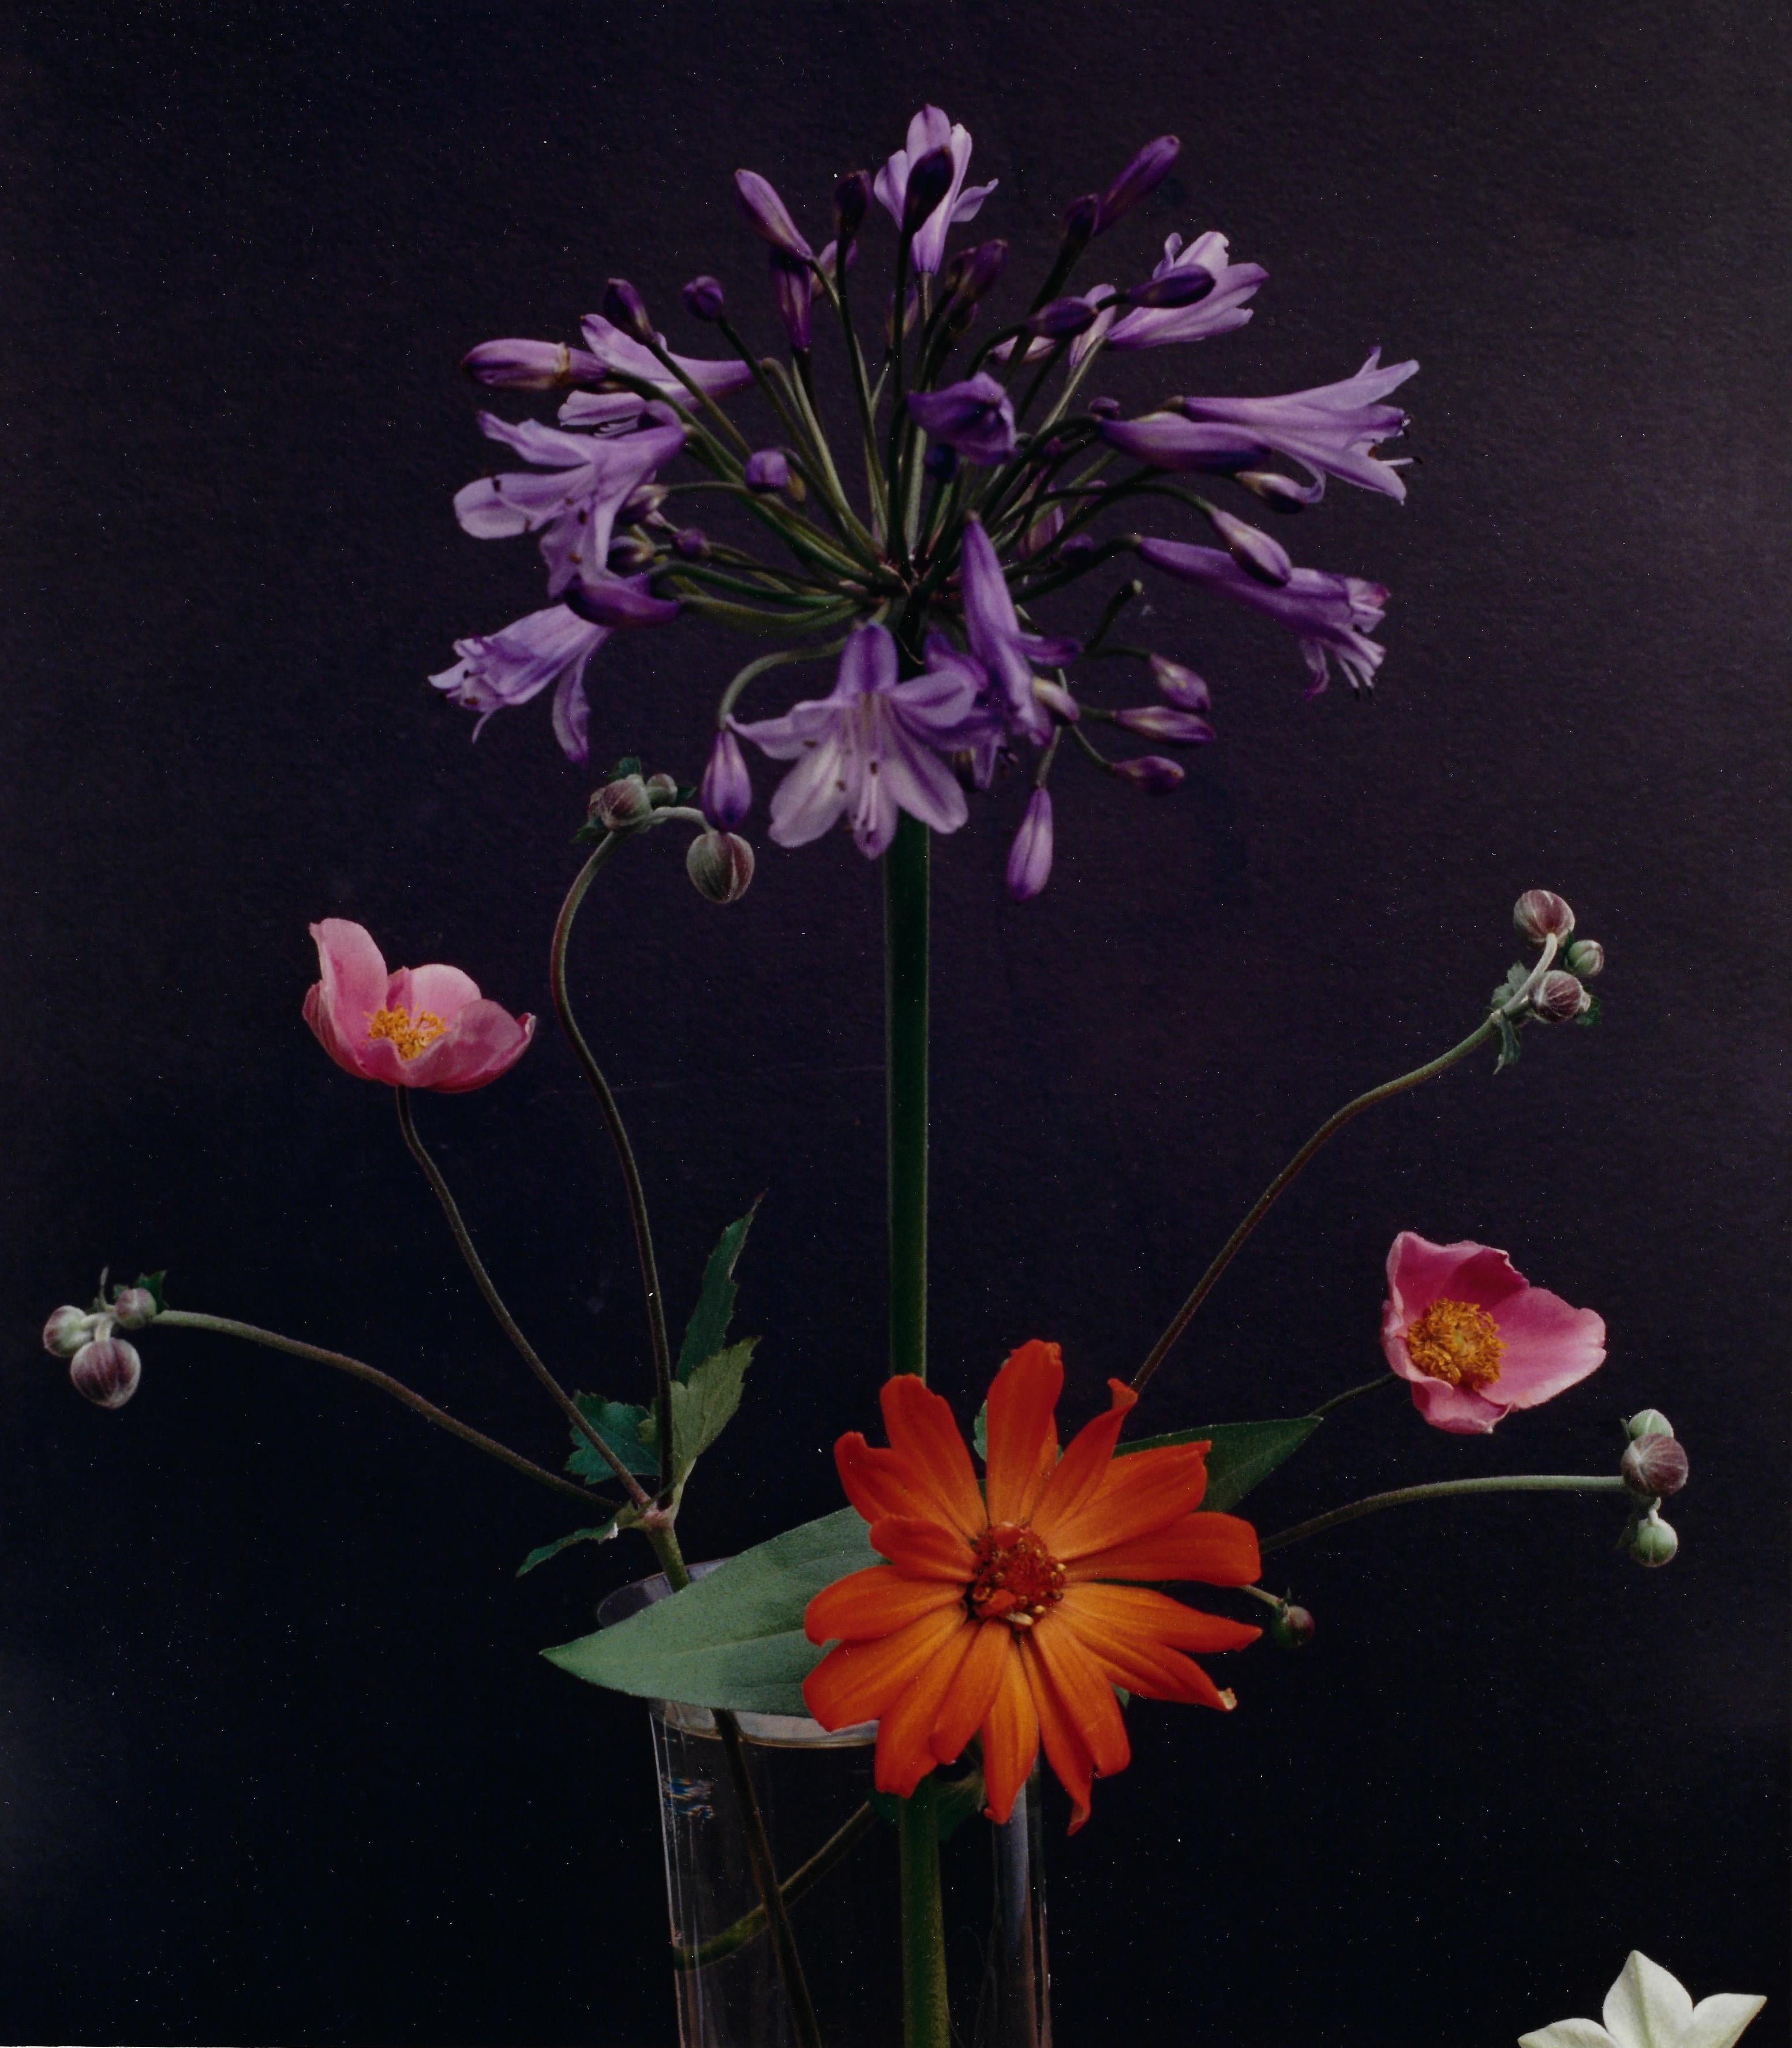 Horst P. Horst Color Photograph - Agapanthus, Anemonoe Japonica, Zinnia